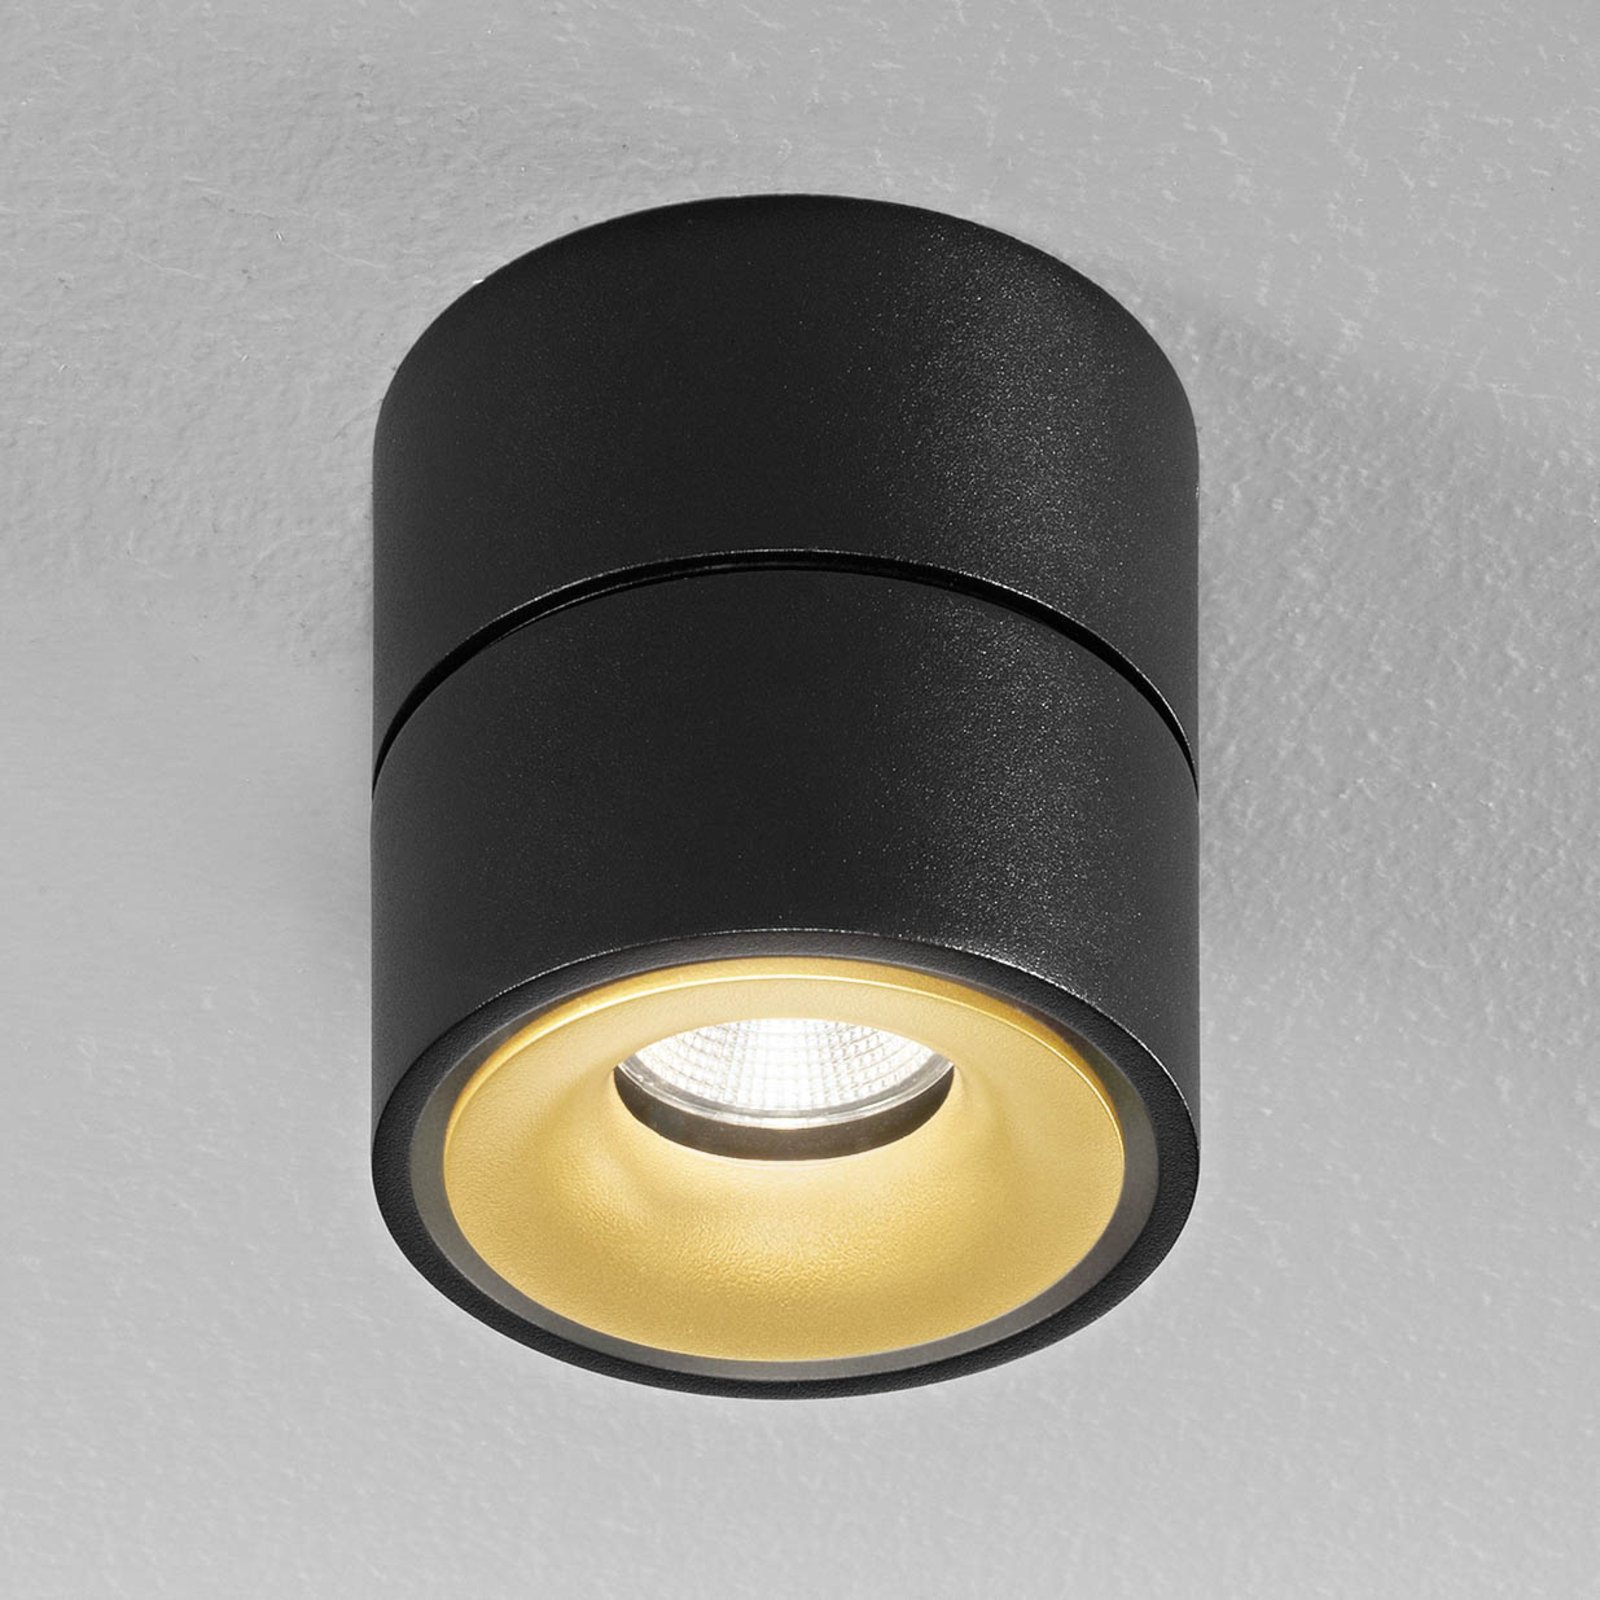 Egger Clippo S spot sufitowy LED, czarno-złoty